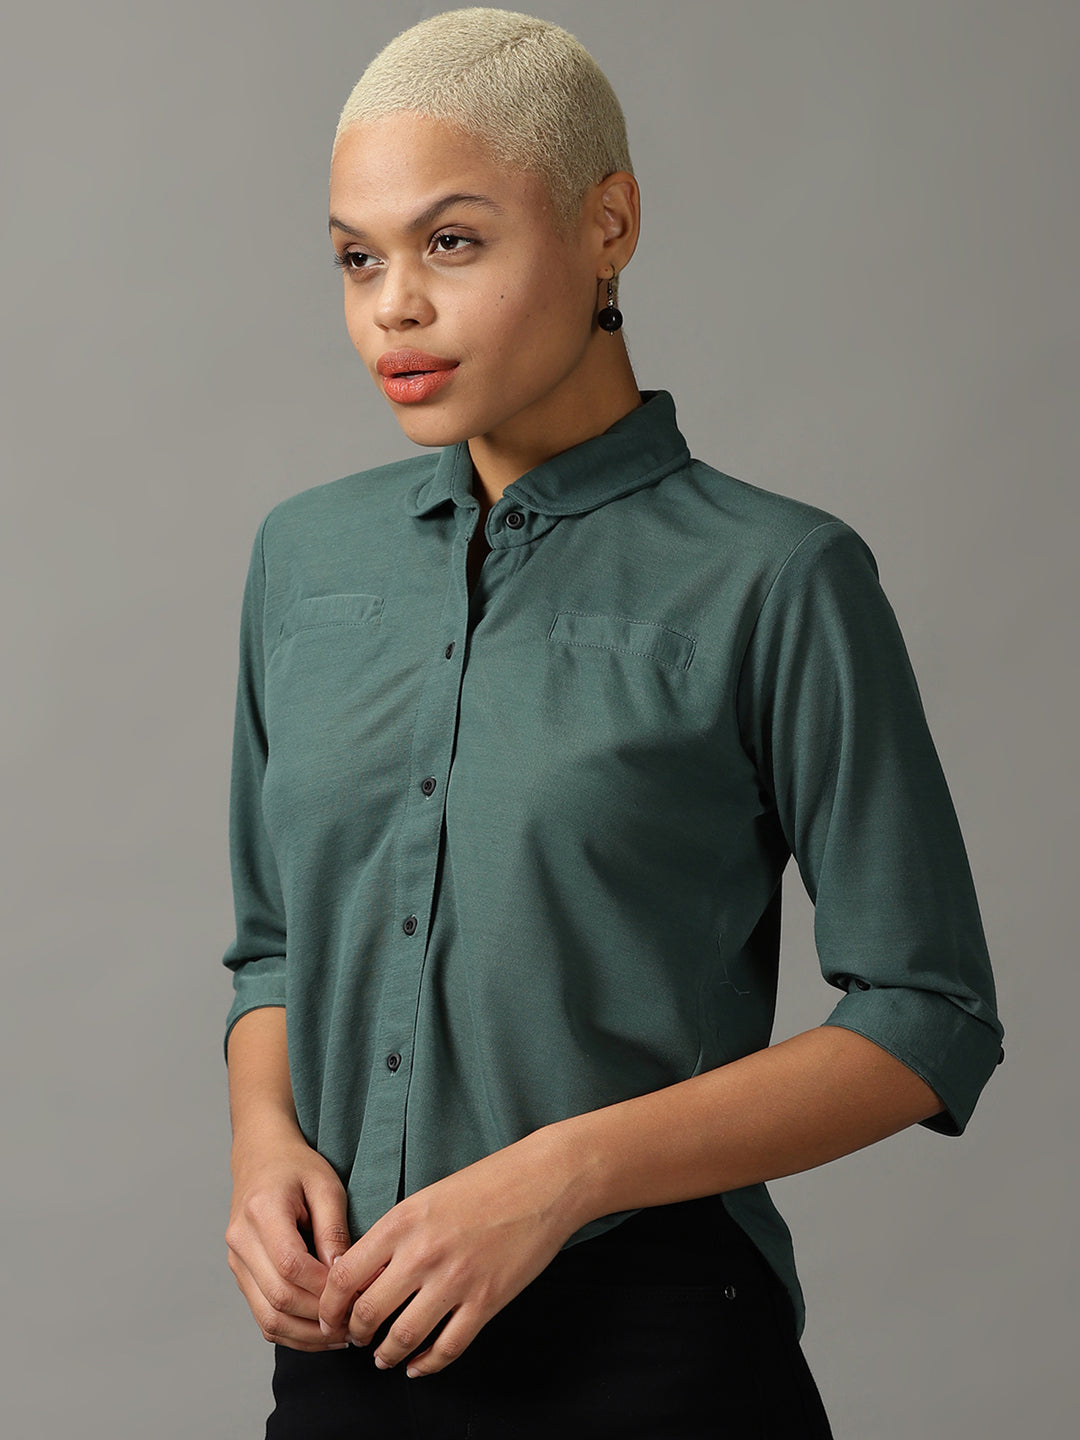 Women's Green Solid Shirt